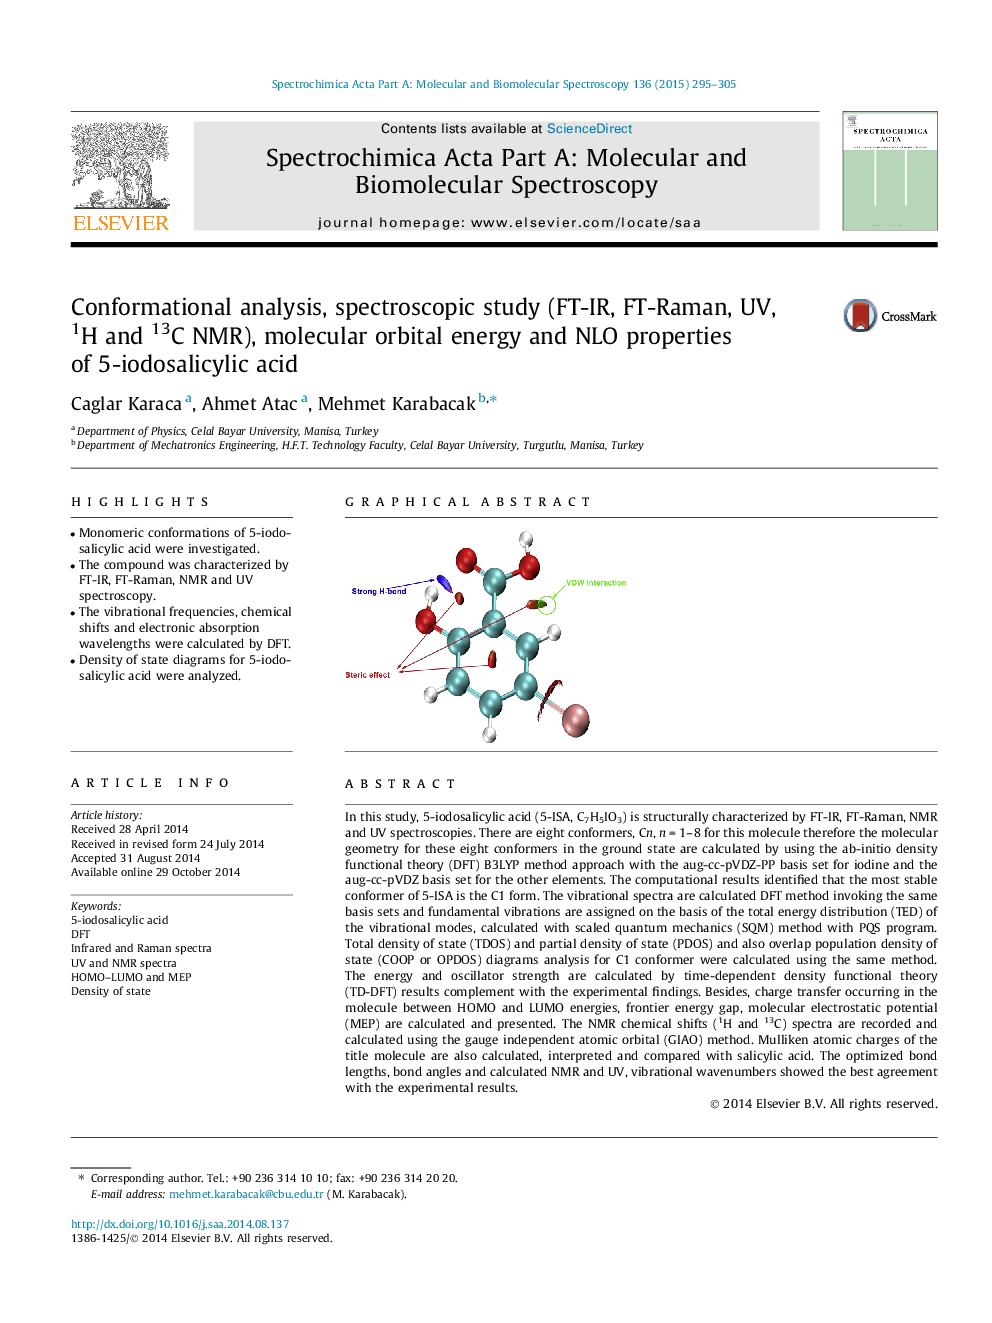 Conformational analysis, spectroscopic study (FT-IR, FT-Raman, UV, 1H and 13C NMR), molecular orbital energy and NLO properties of 5-iodosalicylic acid